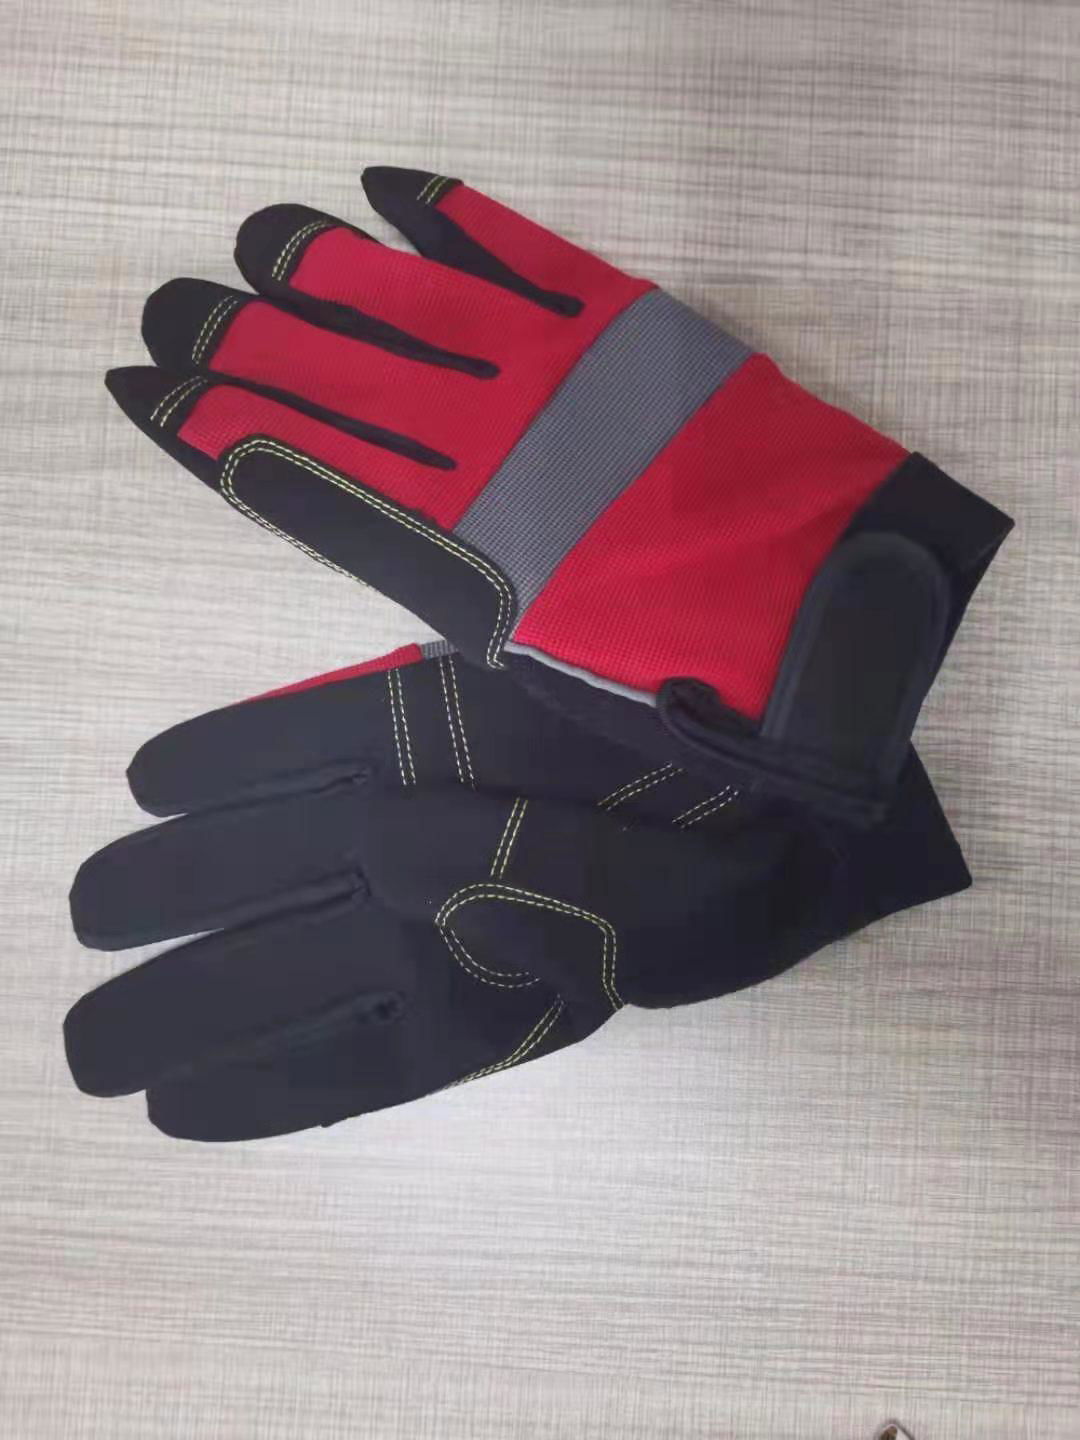 Mechanical safety gloves  driver gloves 2